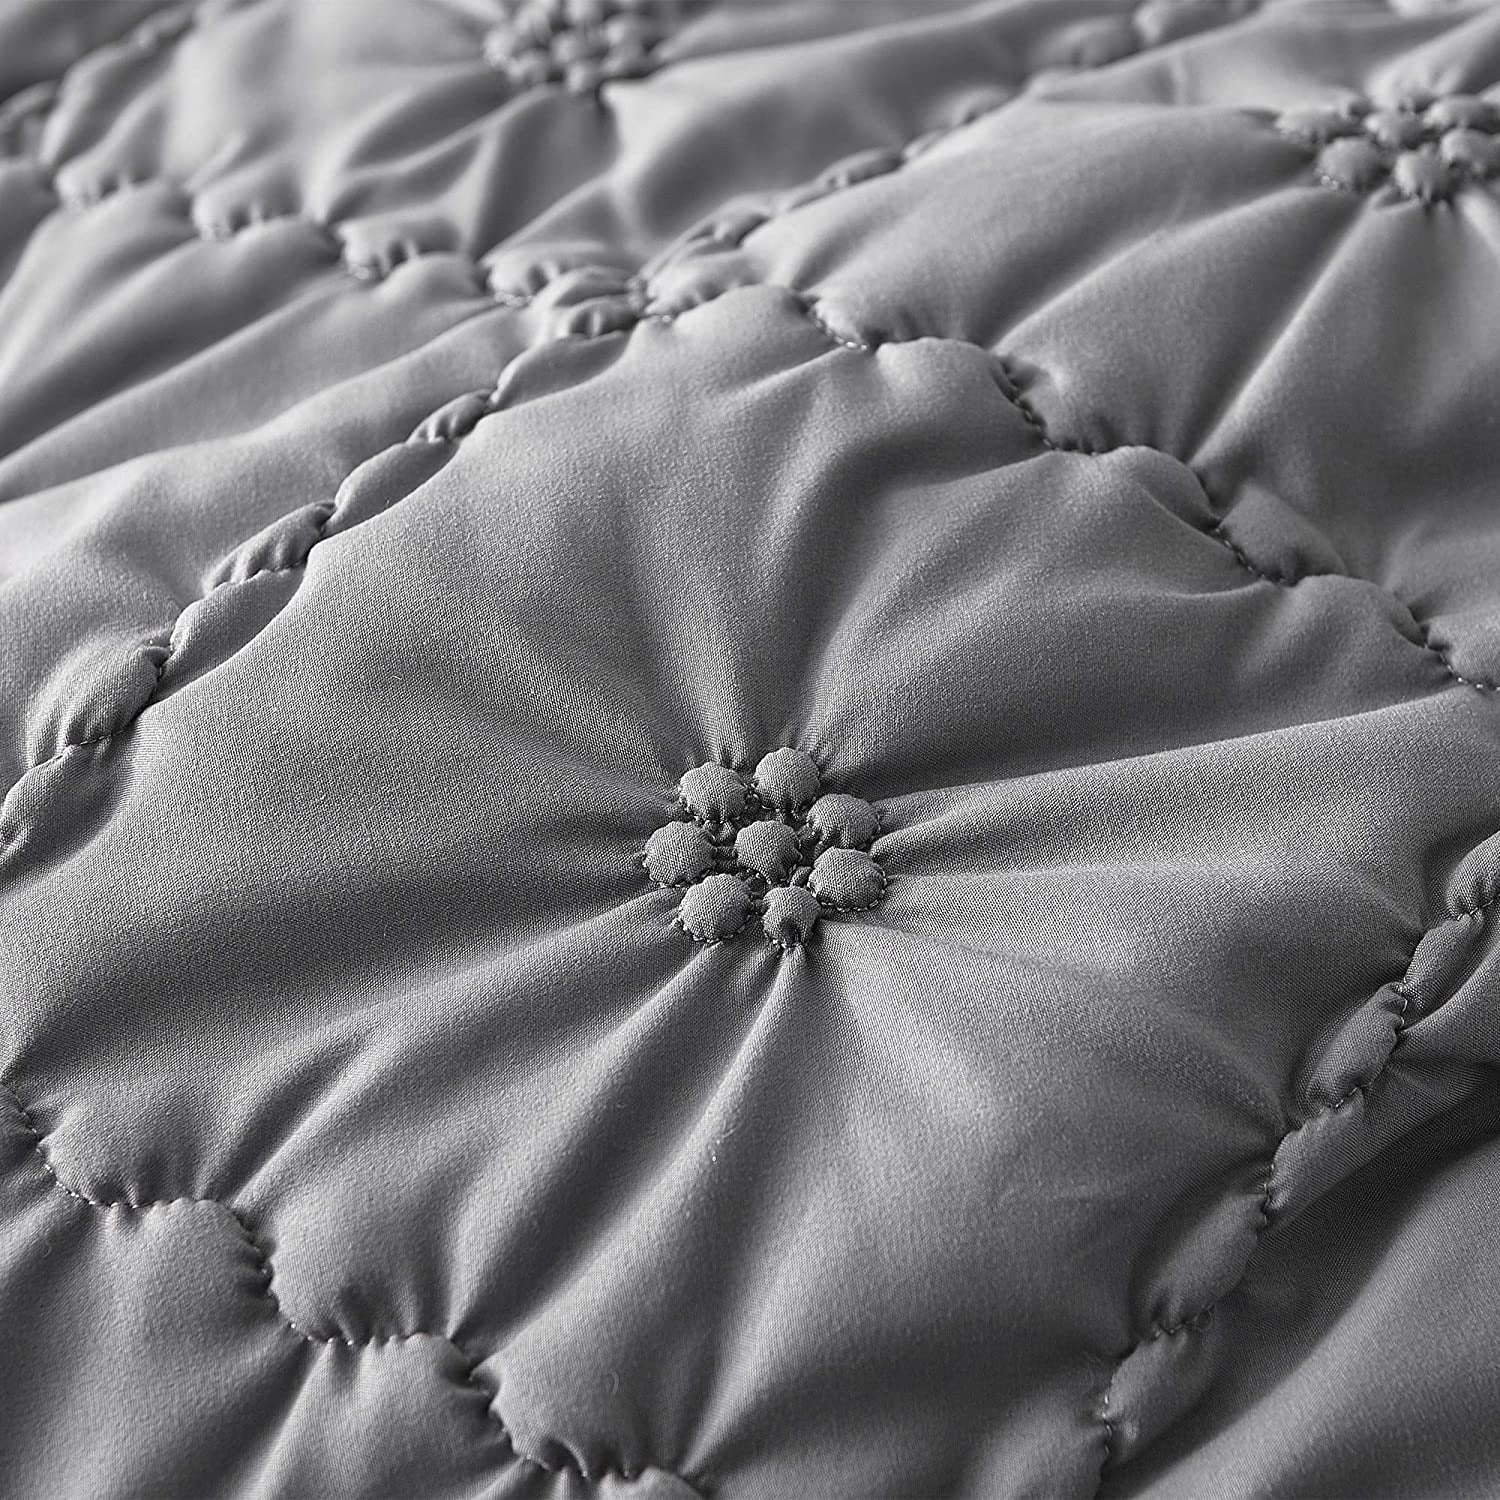 Nati Nasti Coma Inducer Oversized Lightweight Comforter Set Byourbed Size: King Comforter + 2 King Shams